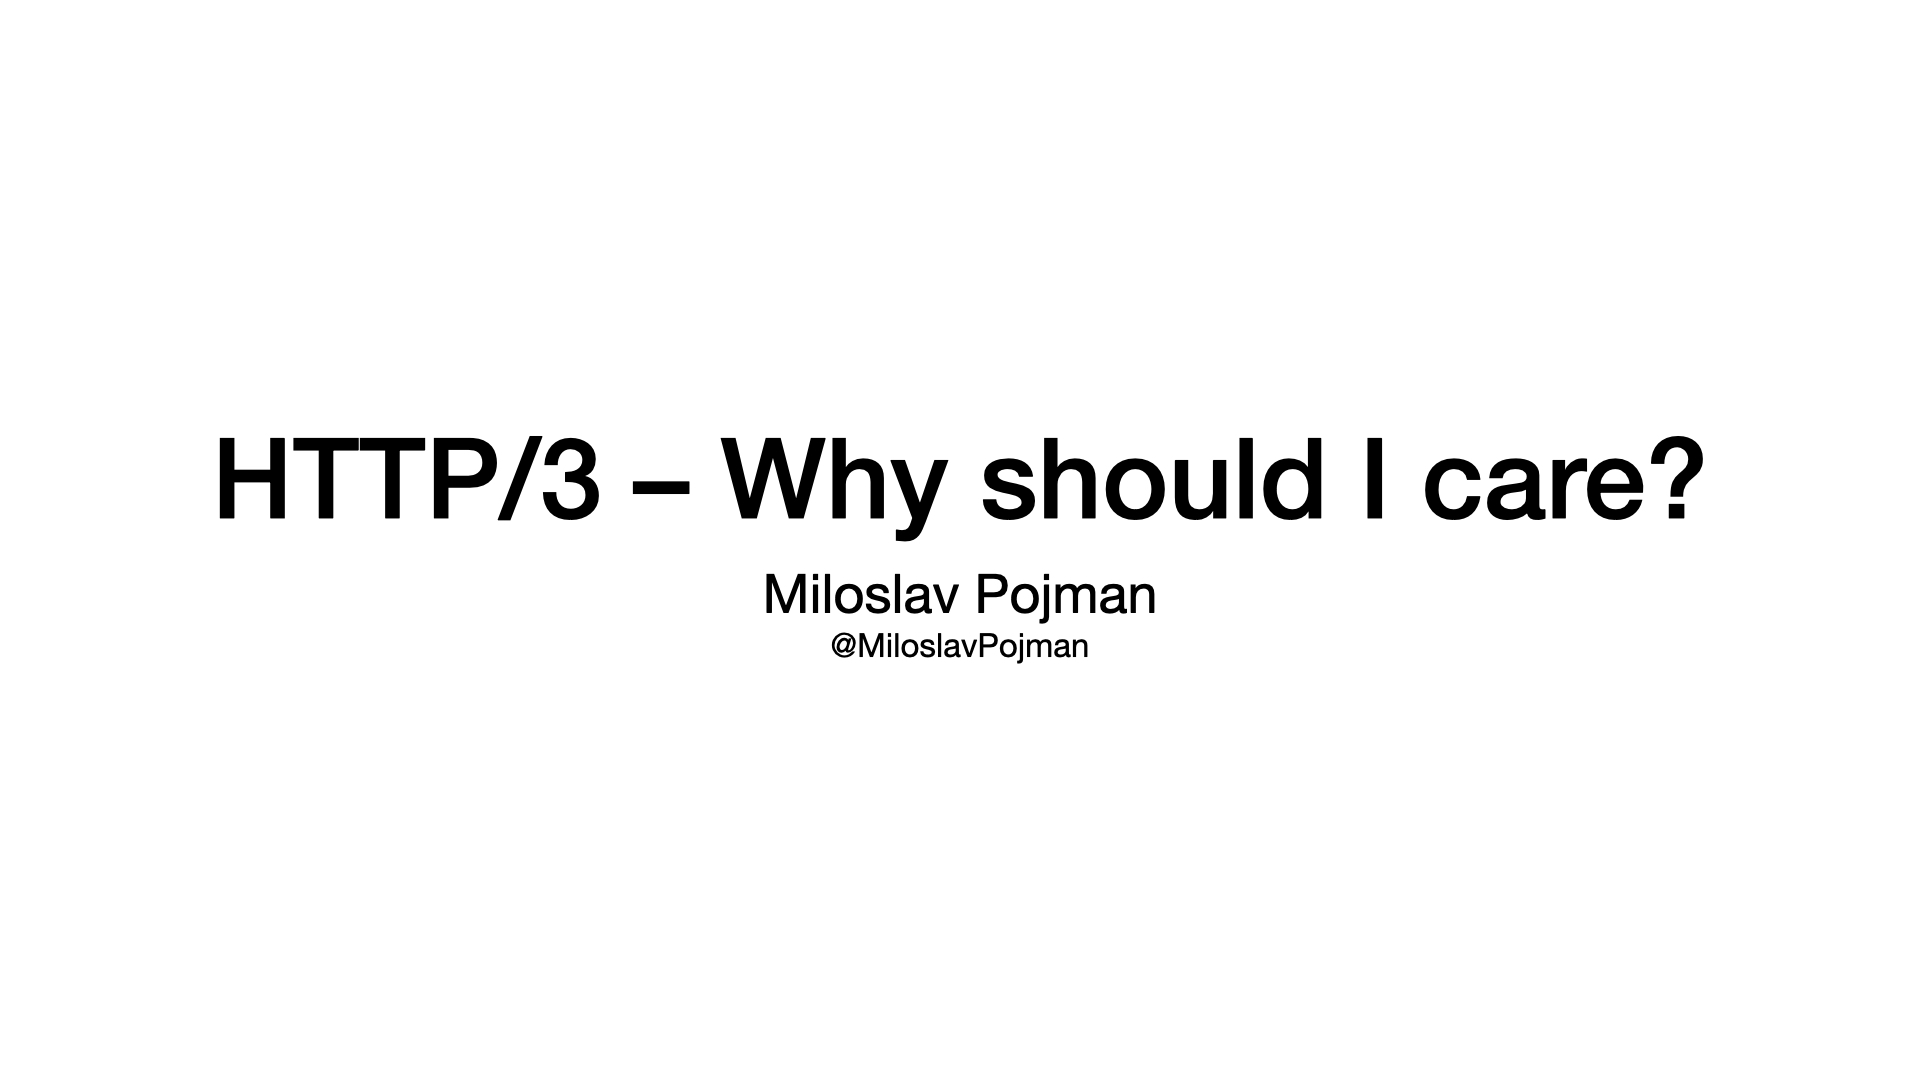 HTTP/3 – Why should I care? - Slide 2